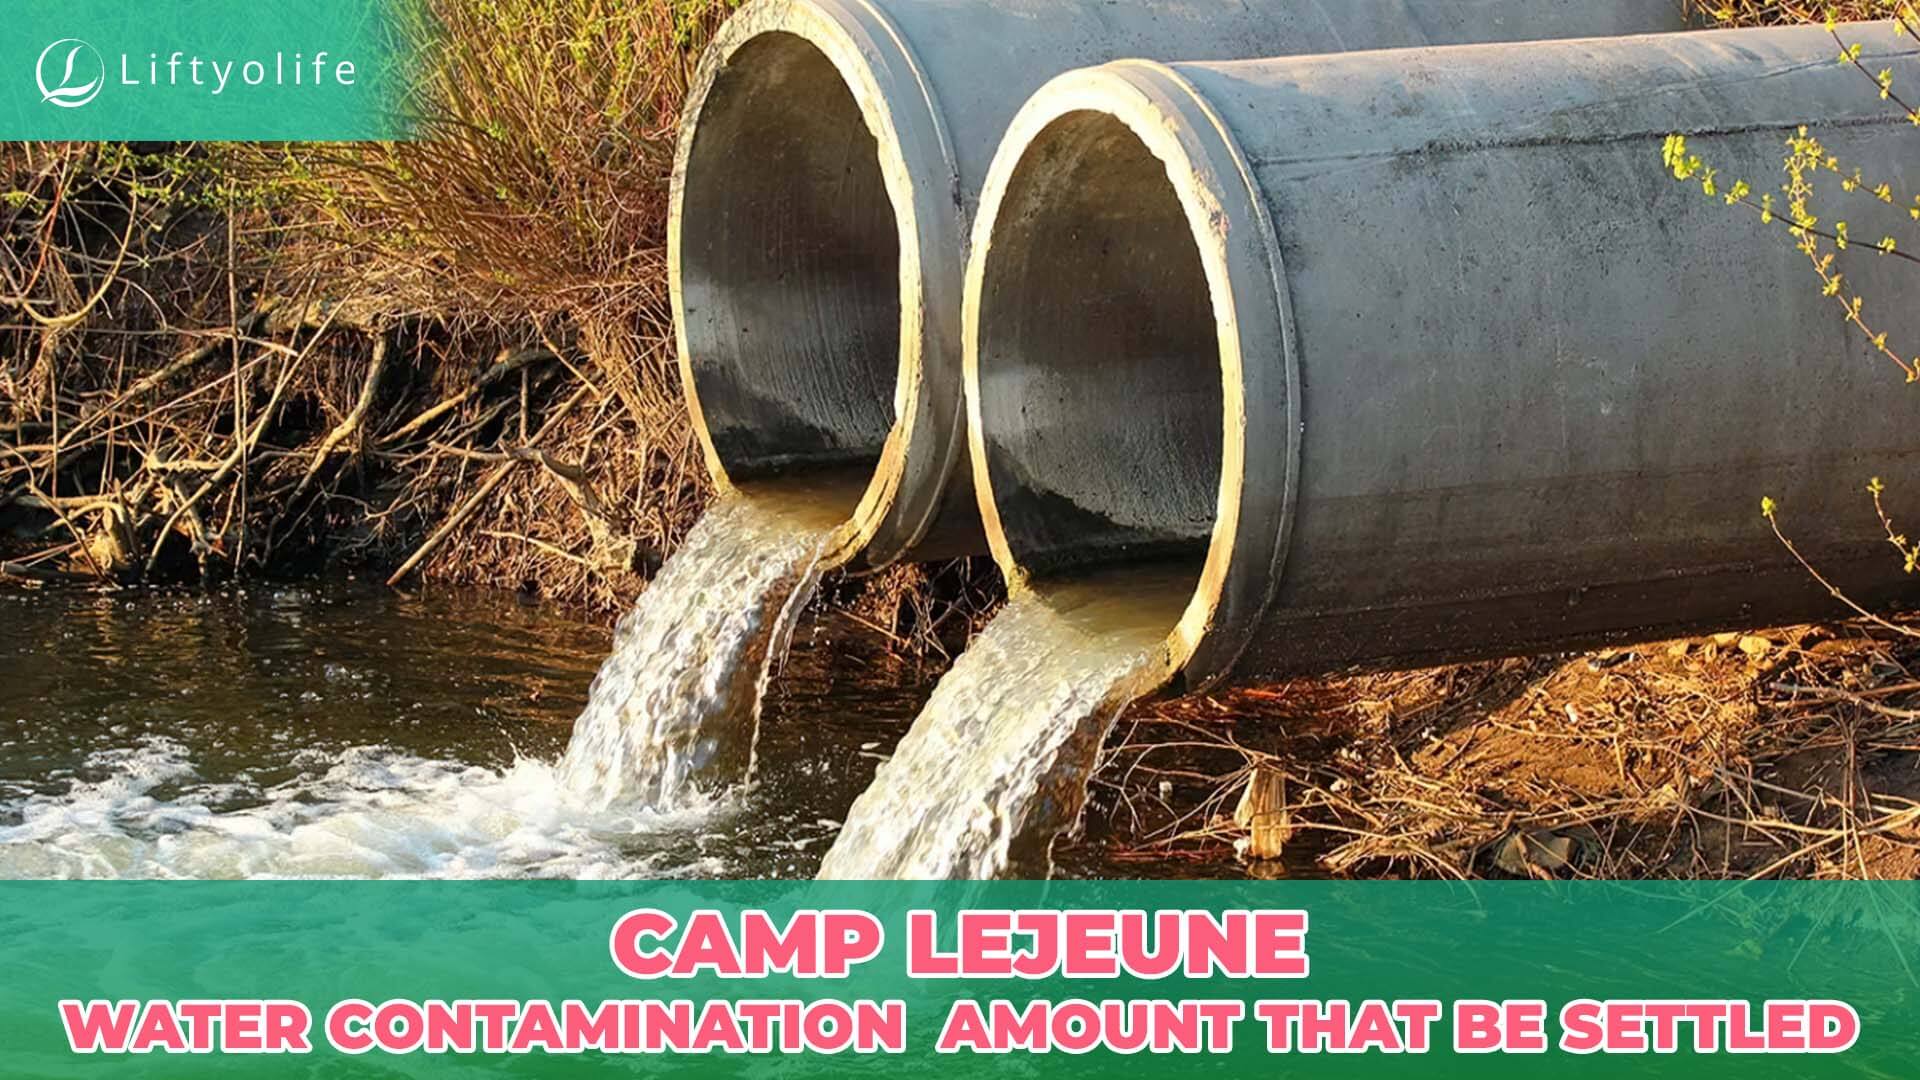 Camp Lejeune Water Contamination Amount Settled